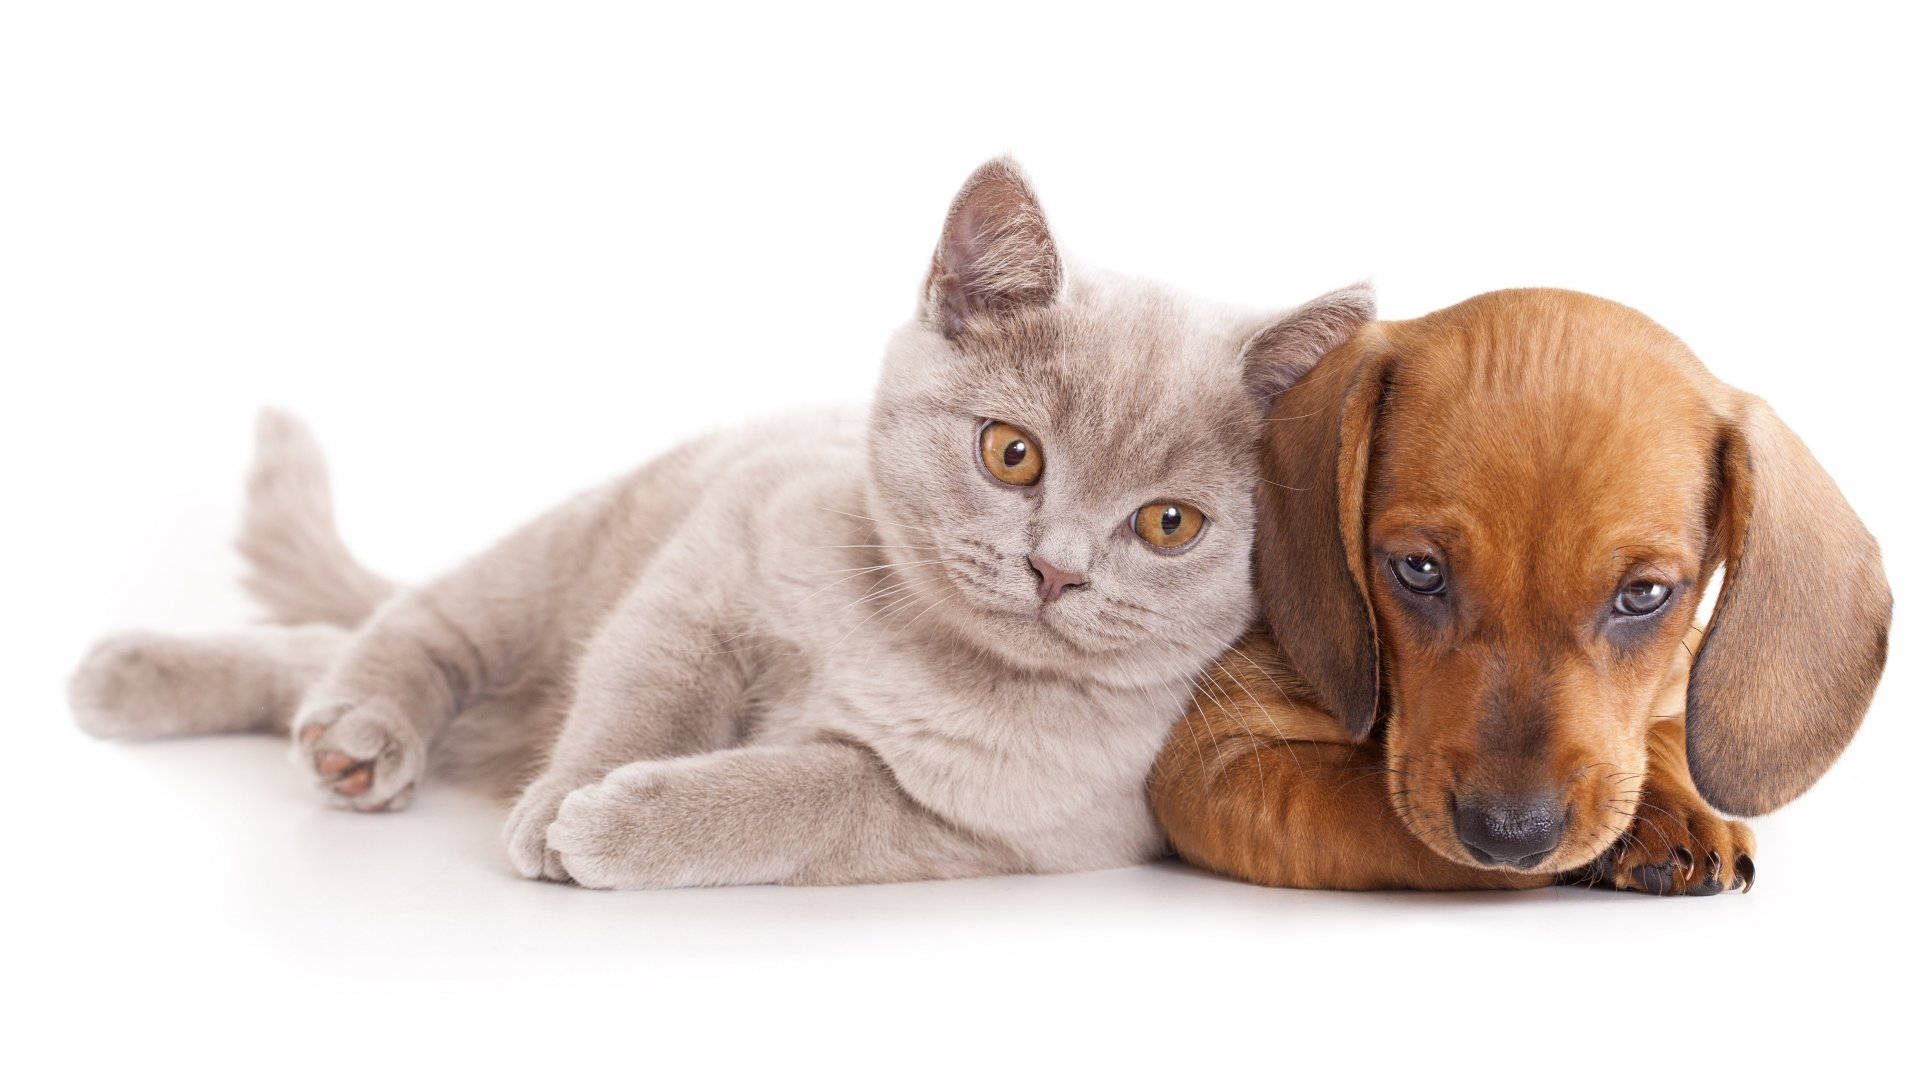 dog and cat wallpaper desktop